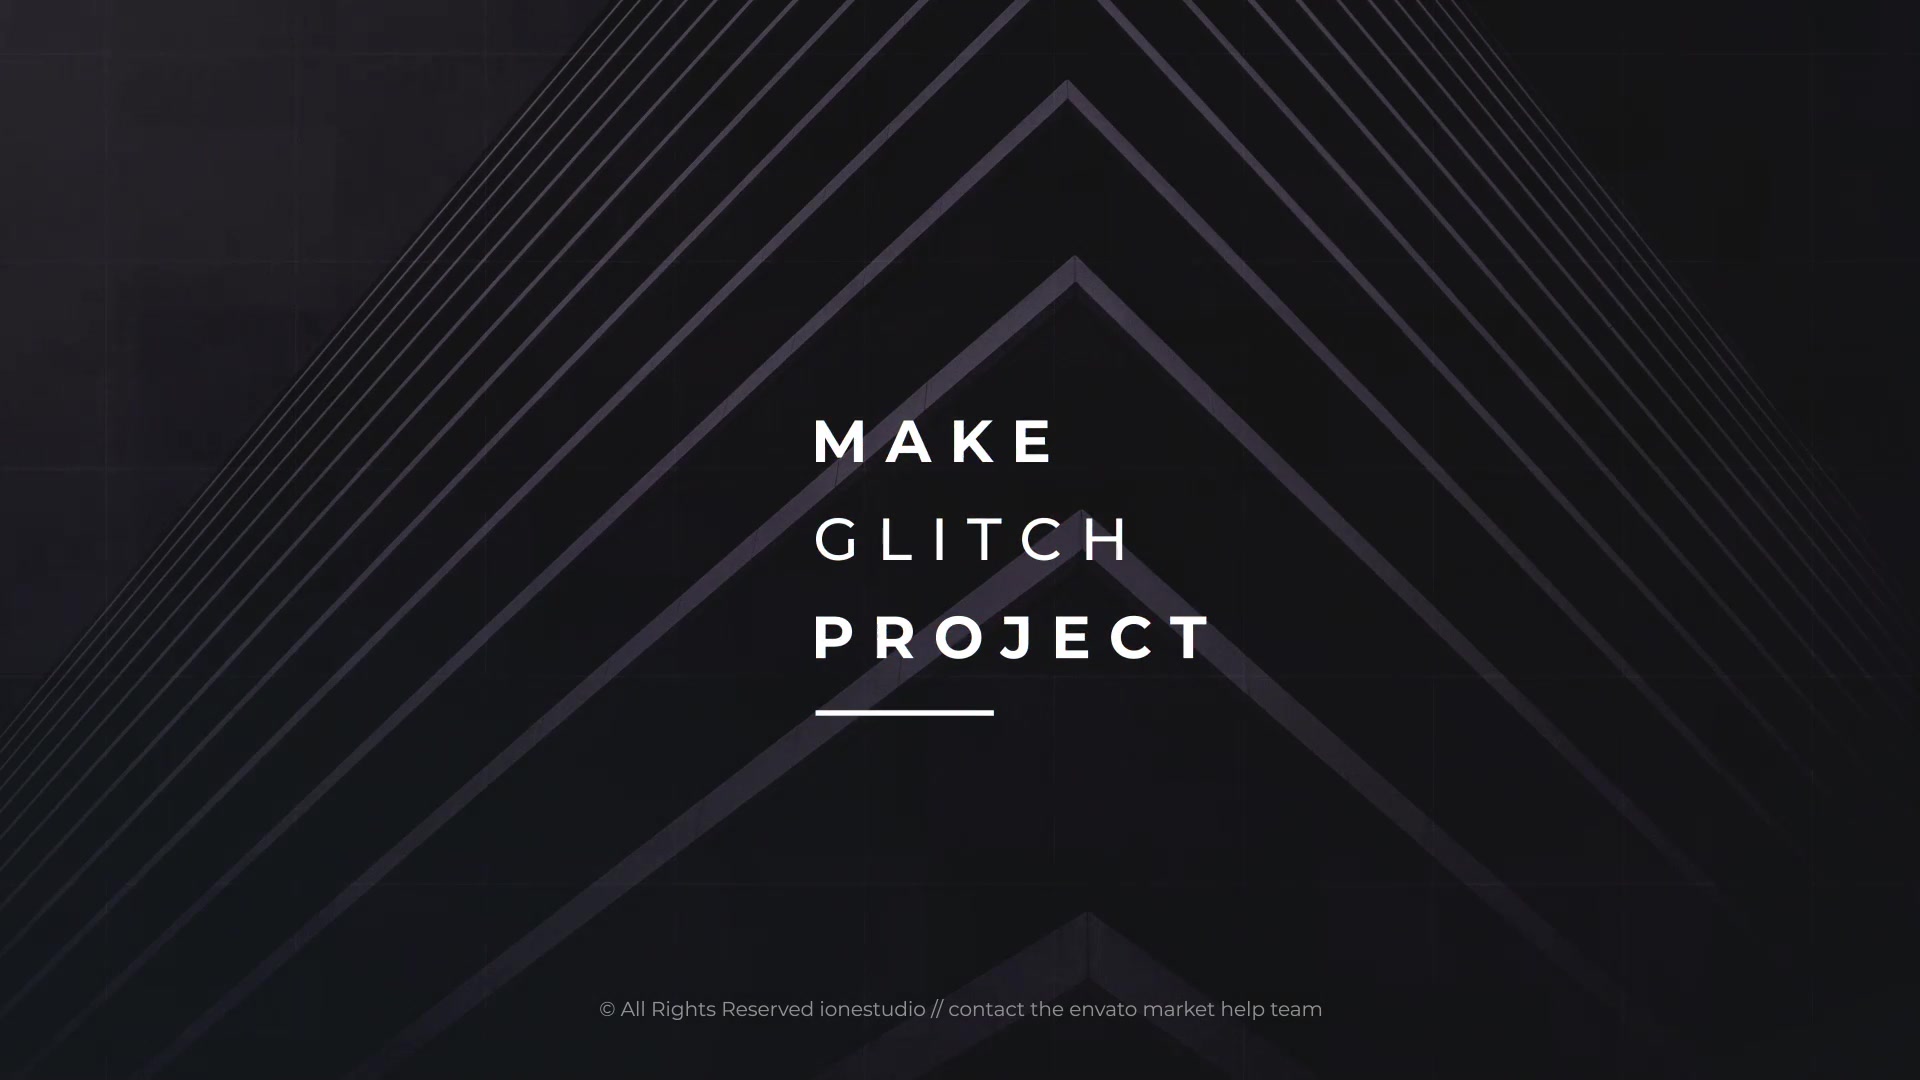 glitch text effect premiere pro